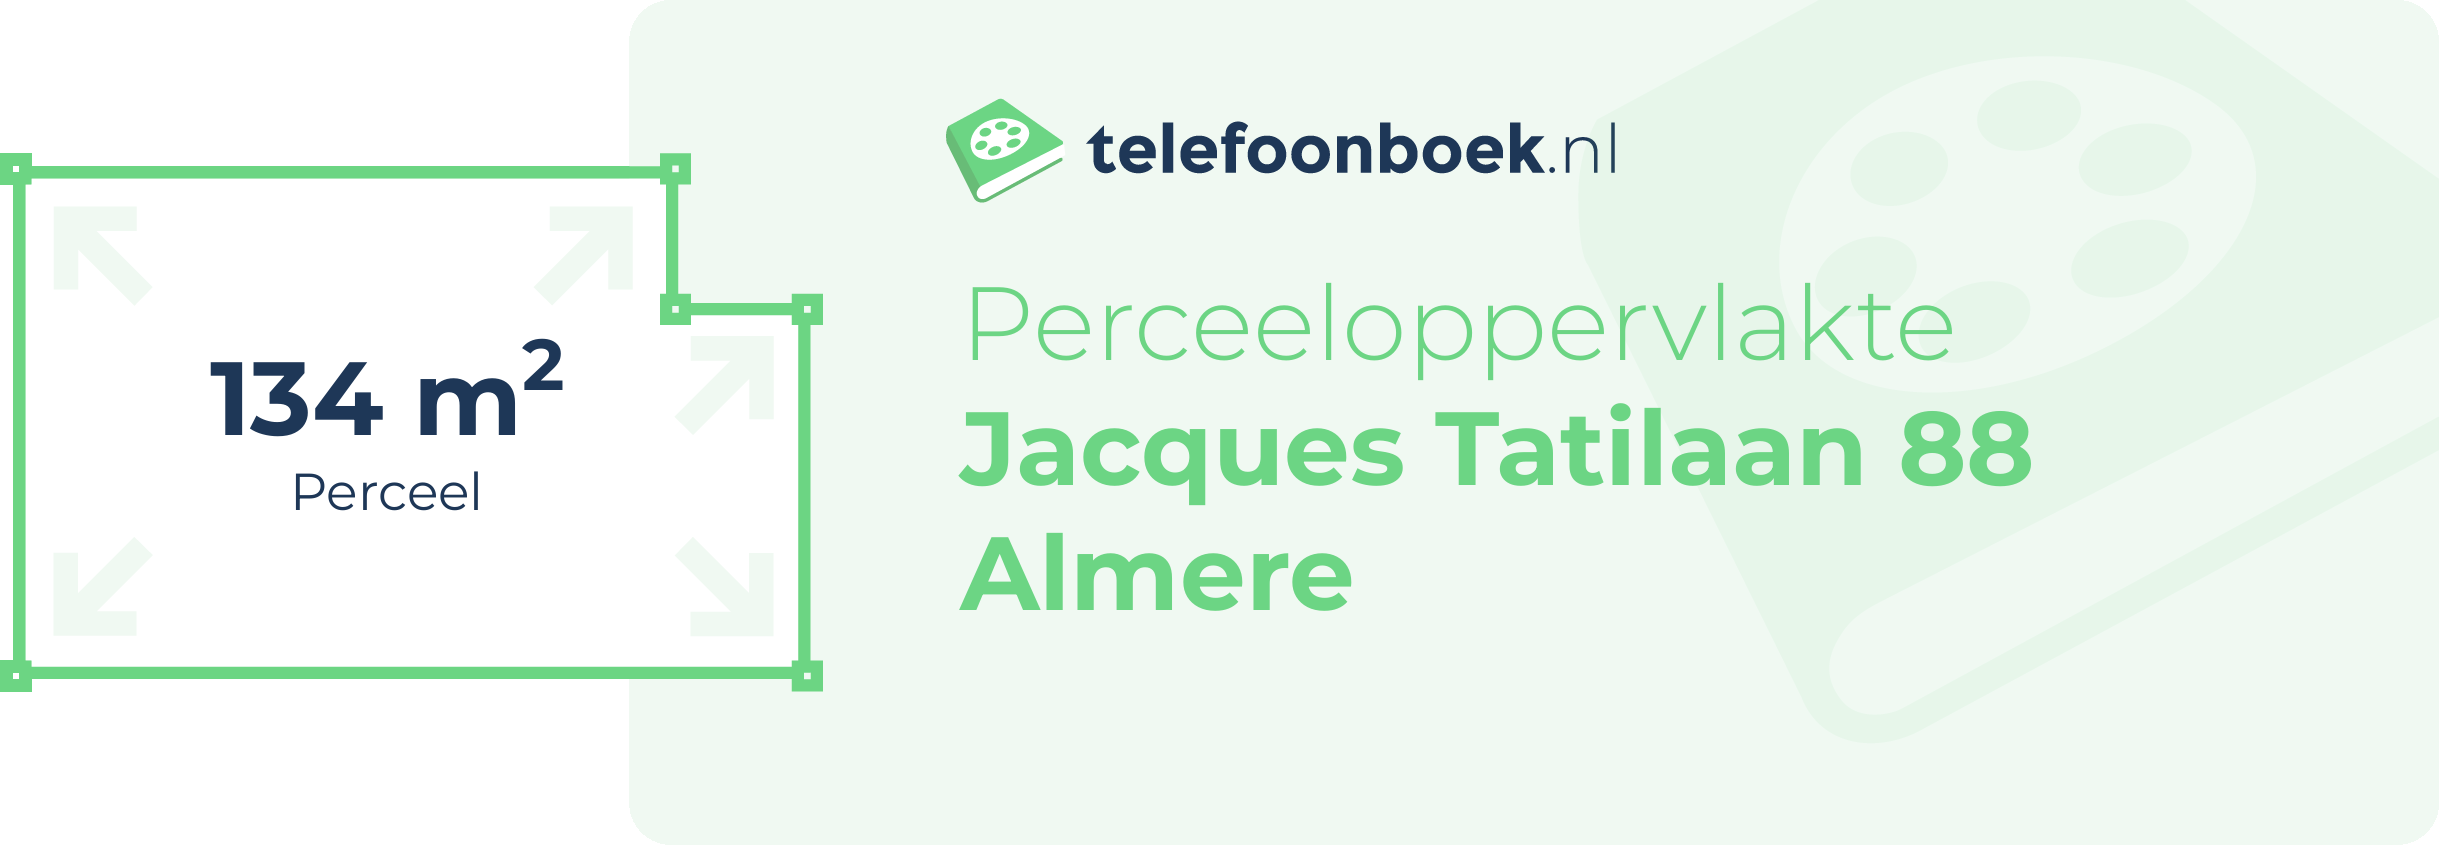 Perceeloppervlakte Jacques Tatilaan 88 Almere